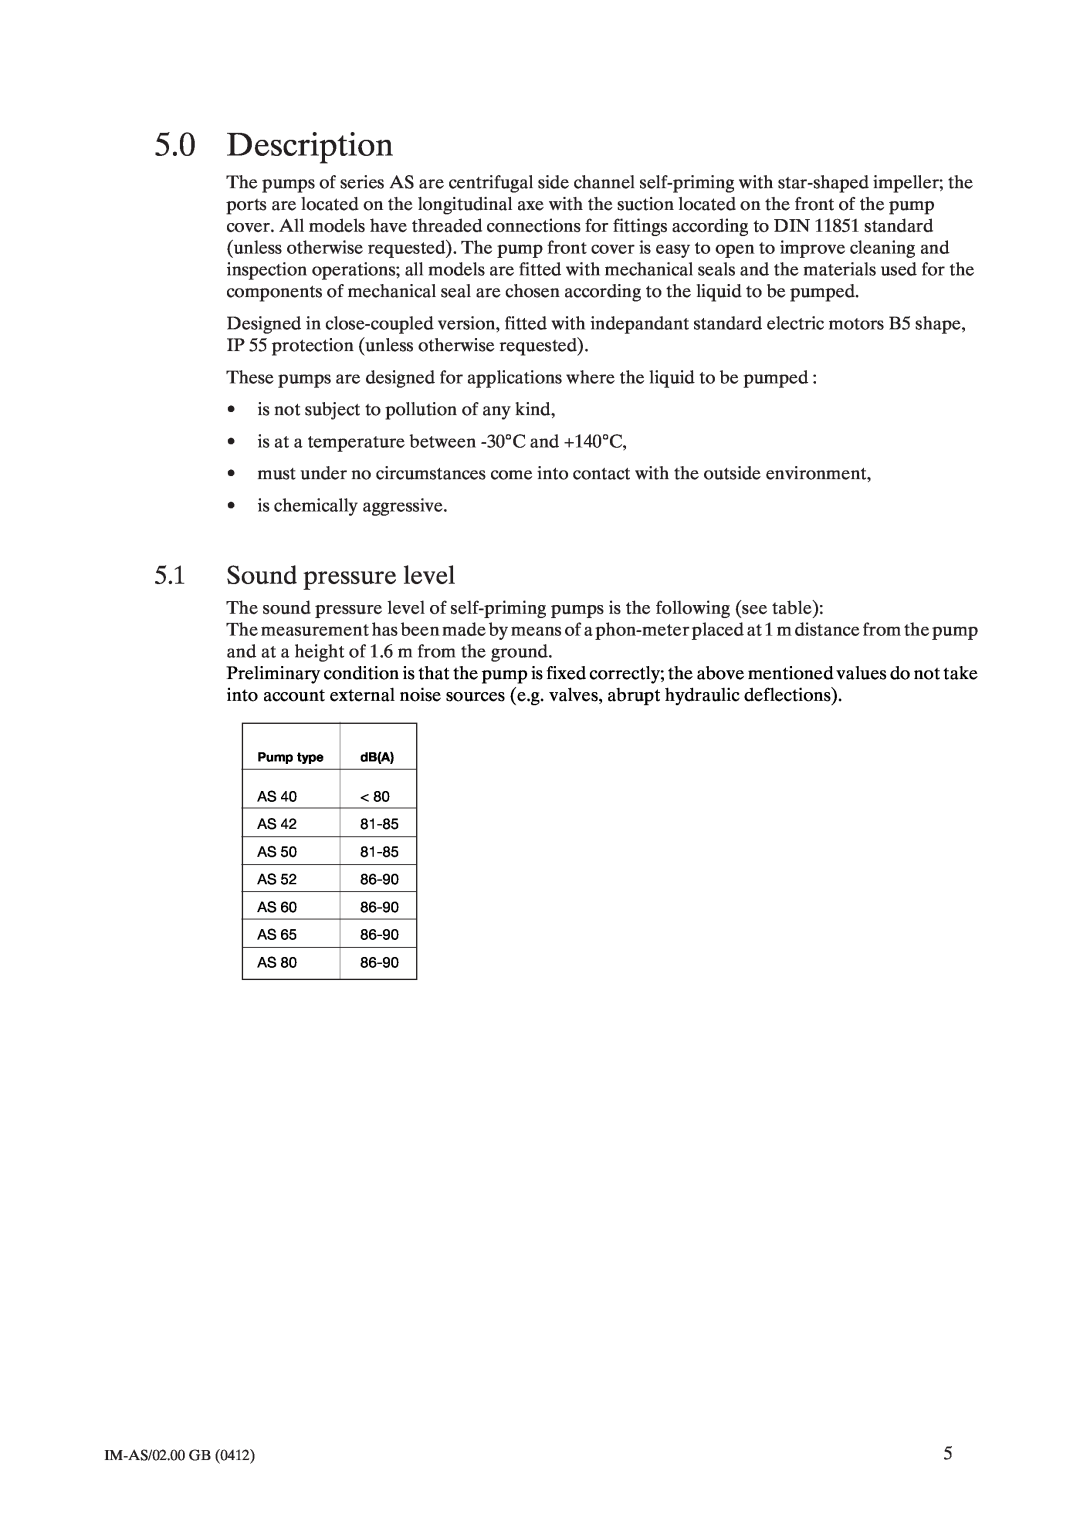 Johnson Controls AS instruction manual Description, 5.1Sound pressure level 